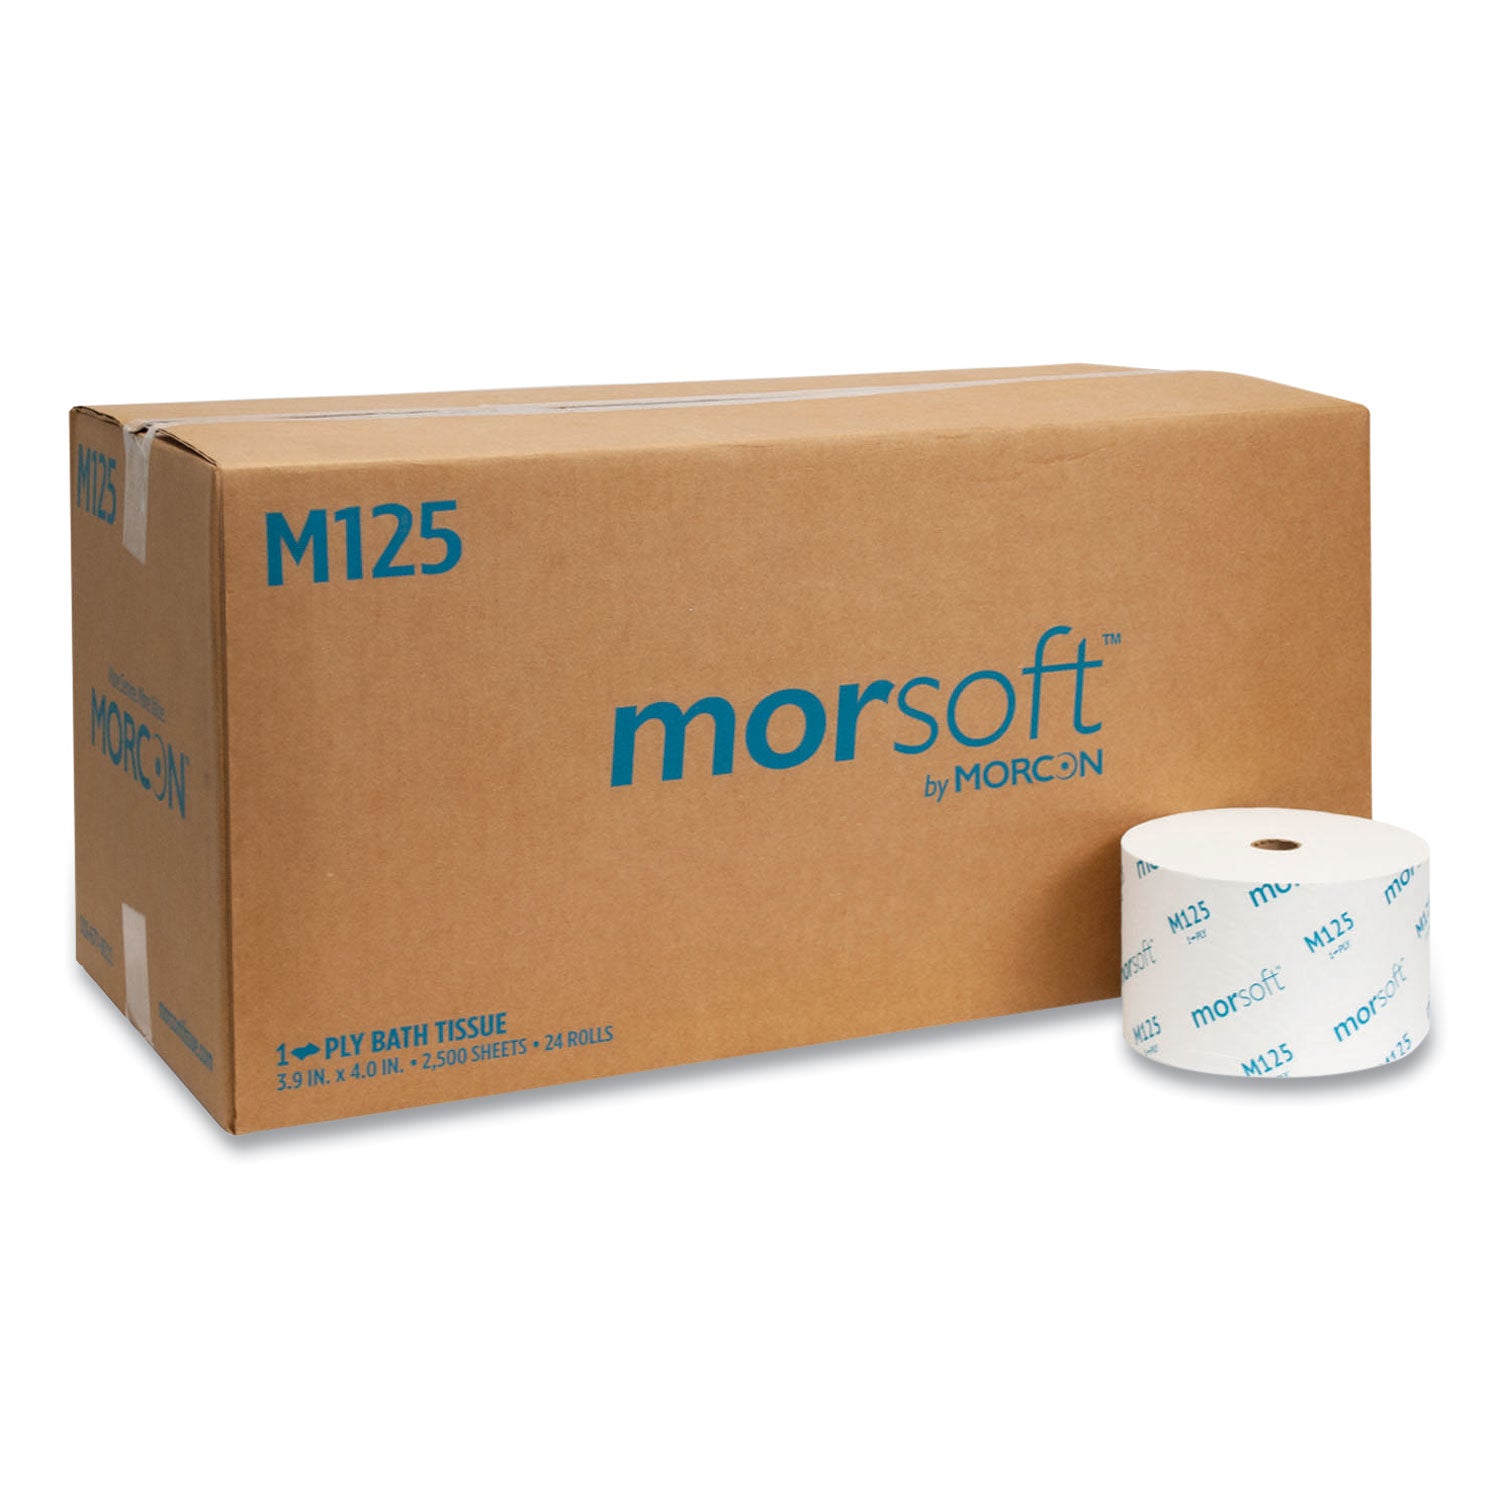 small-core-bath-tissue-septic-safe-1-ply-white-2500-sheets-roll-24-rolls-carton_morm125 - 1